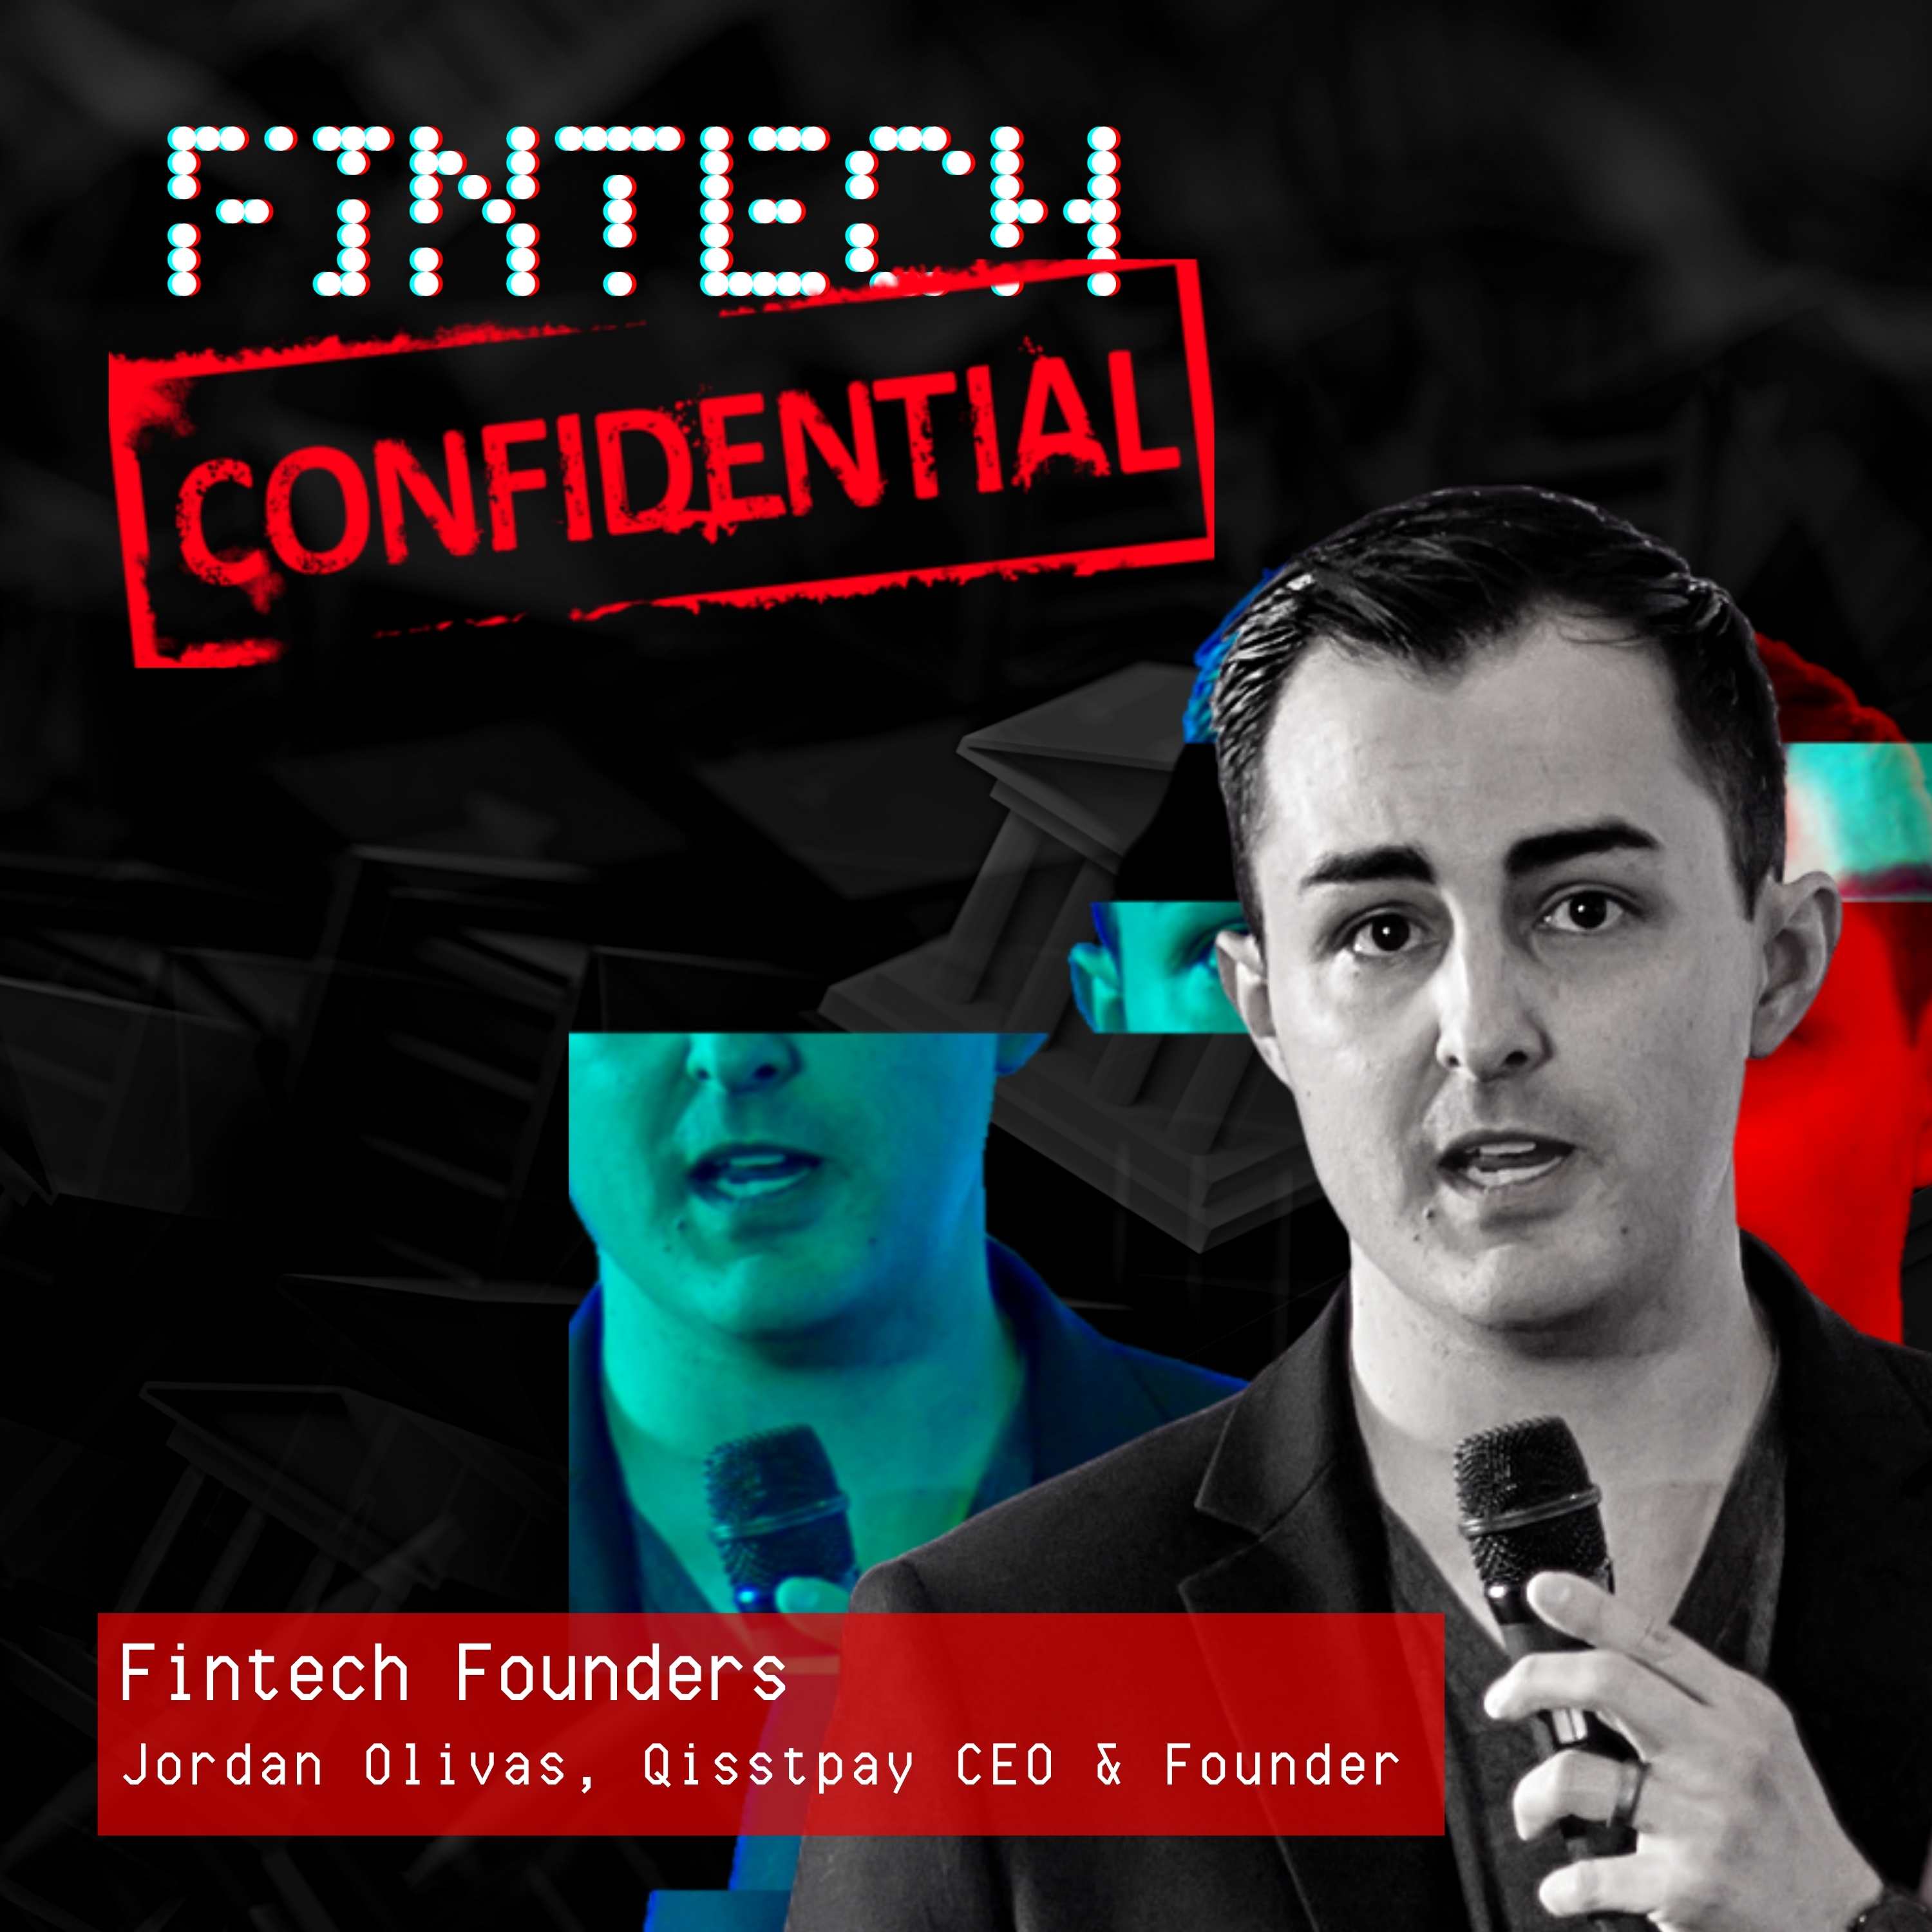 Artwork for podcast Fintech Confidential